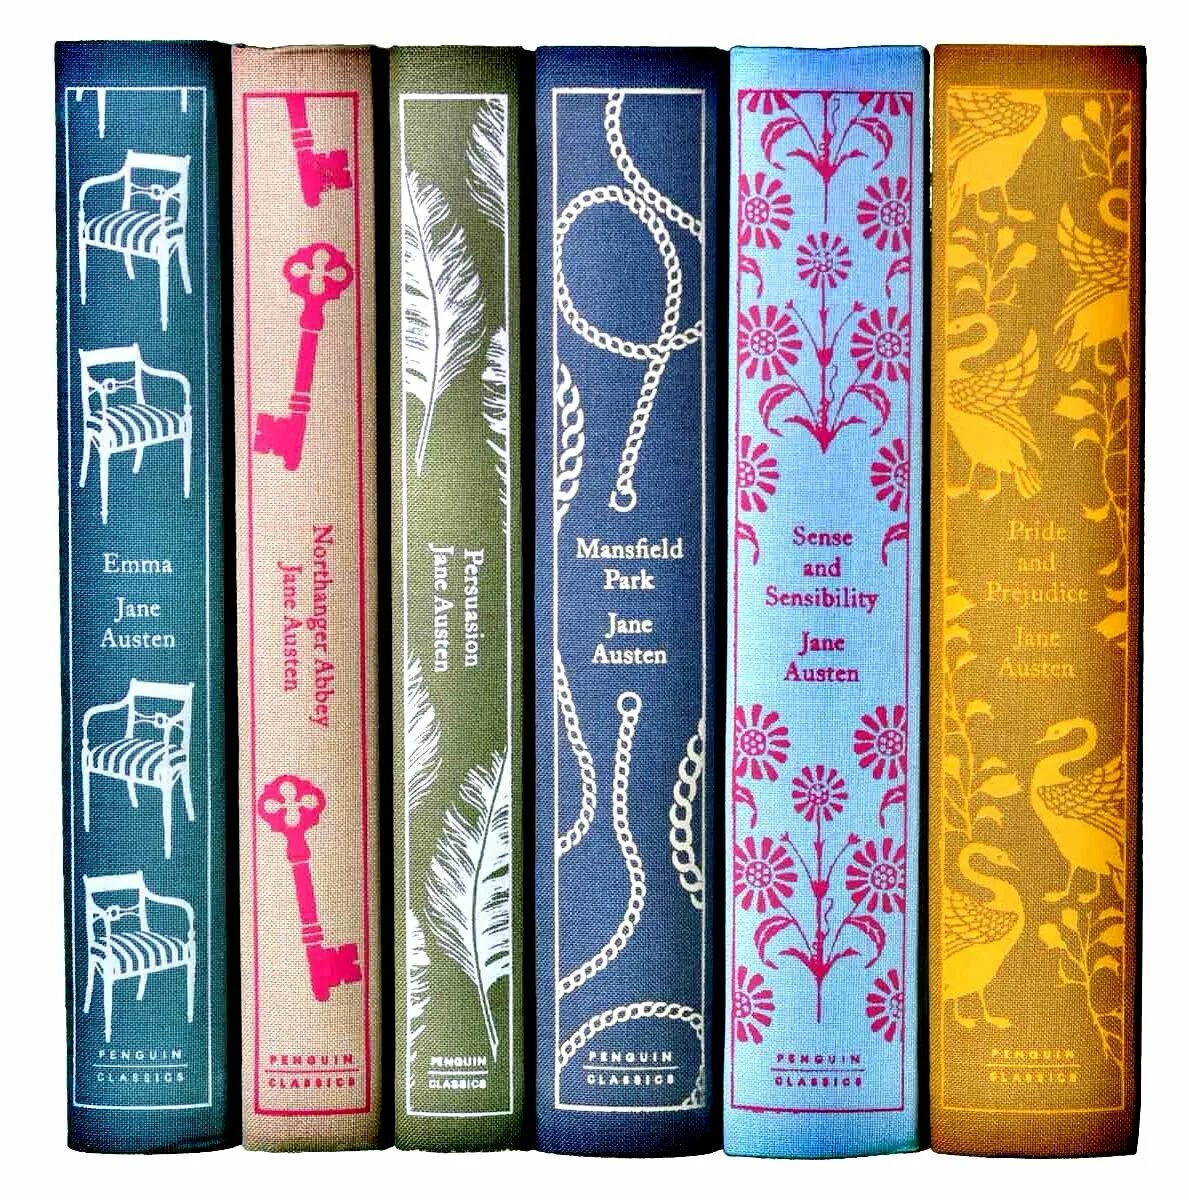 Great novel. Jane Austen книги. Jane Austen Set of books. Обложка книги дизайн. Дизайнерские обложки классических книг.